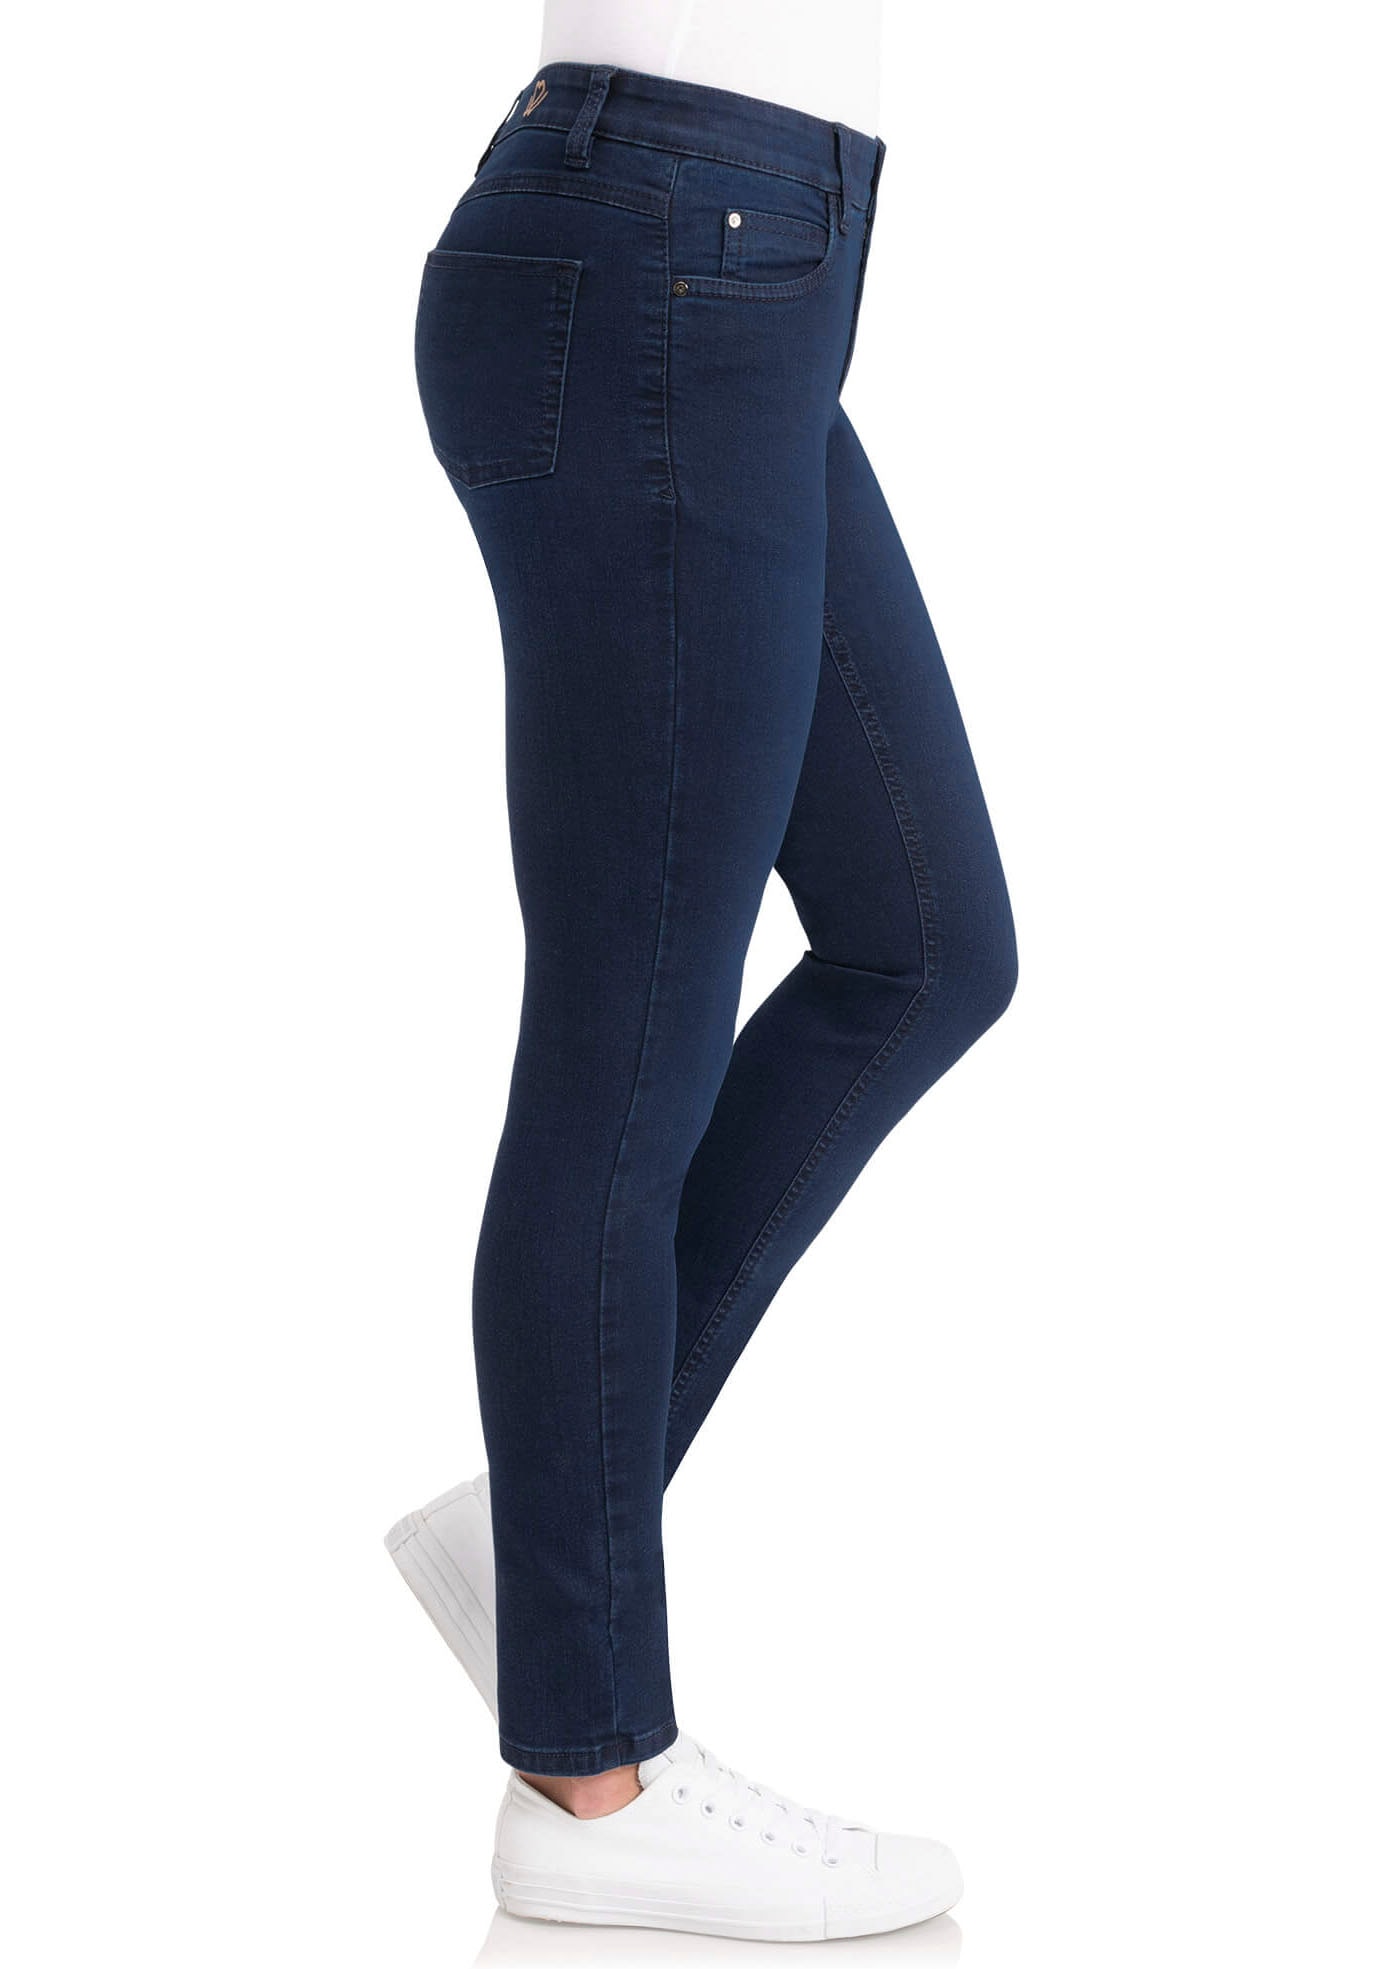 OTTO »Ankle«, Schmale im bestellen wonderjeans Shop Online Form verkürzte Ankle-Jeans leicht